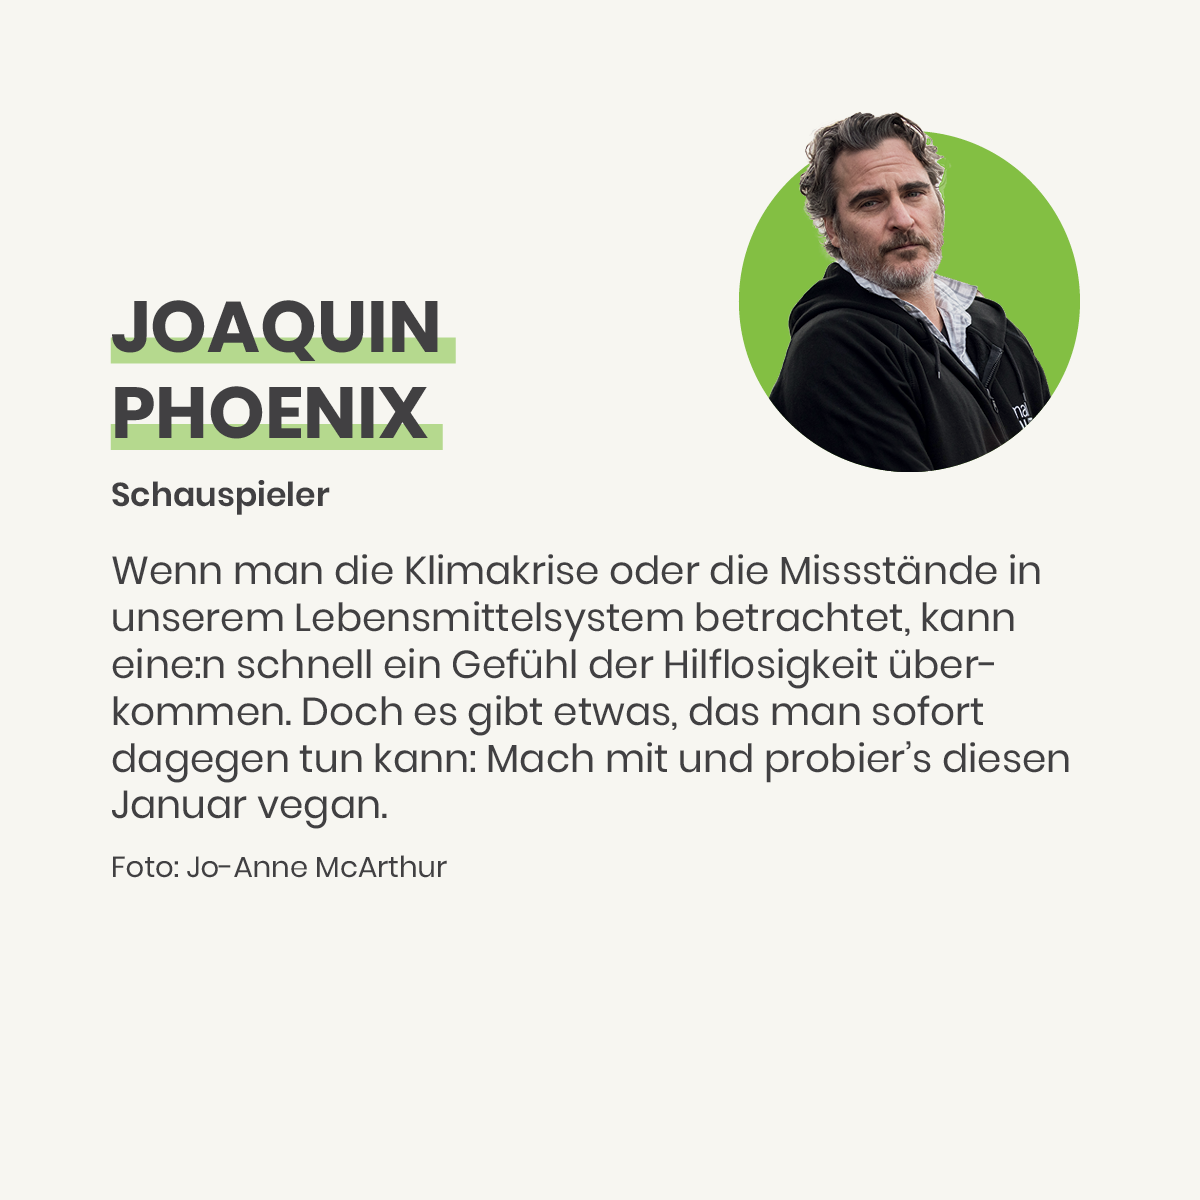 Joaquin Phoenix